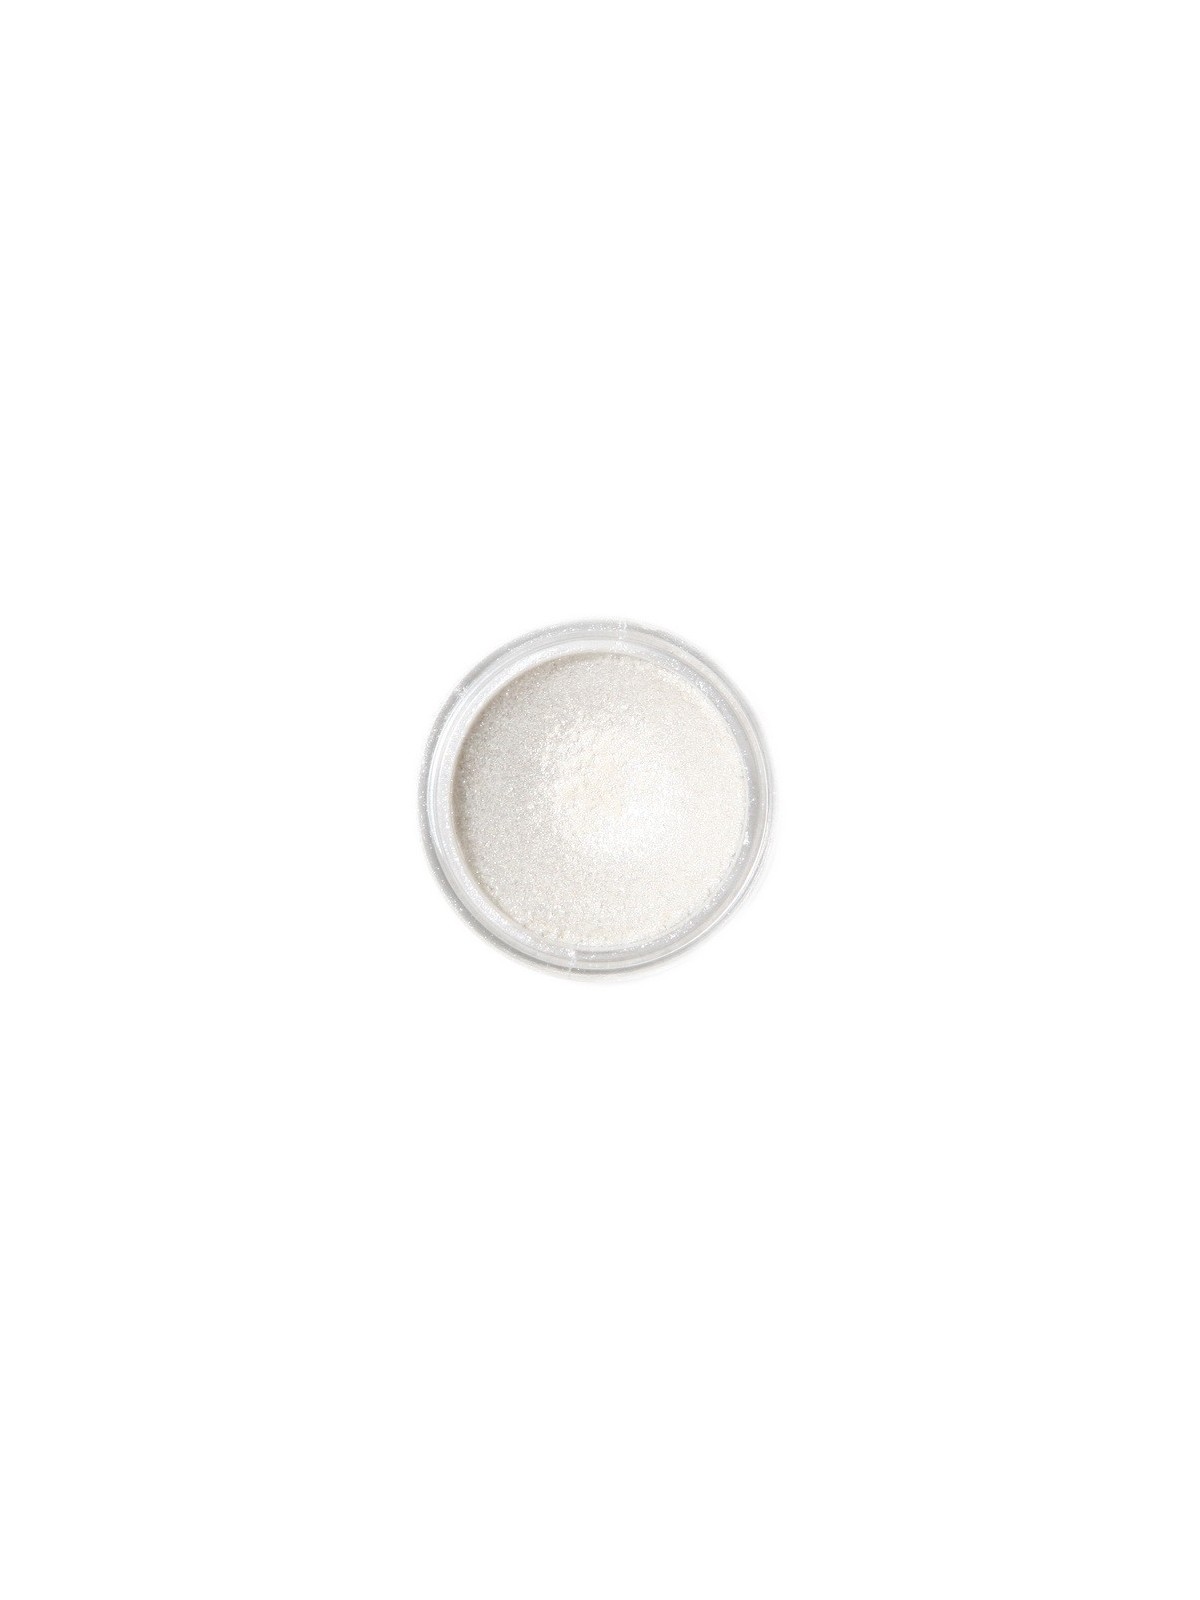 Essbare Staub perlweiß Fractal - Sparkling White, Szikrázó fehér (3,5 g)